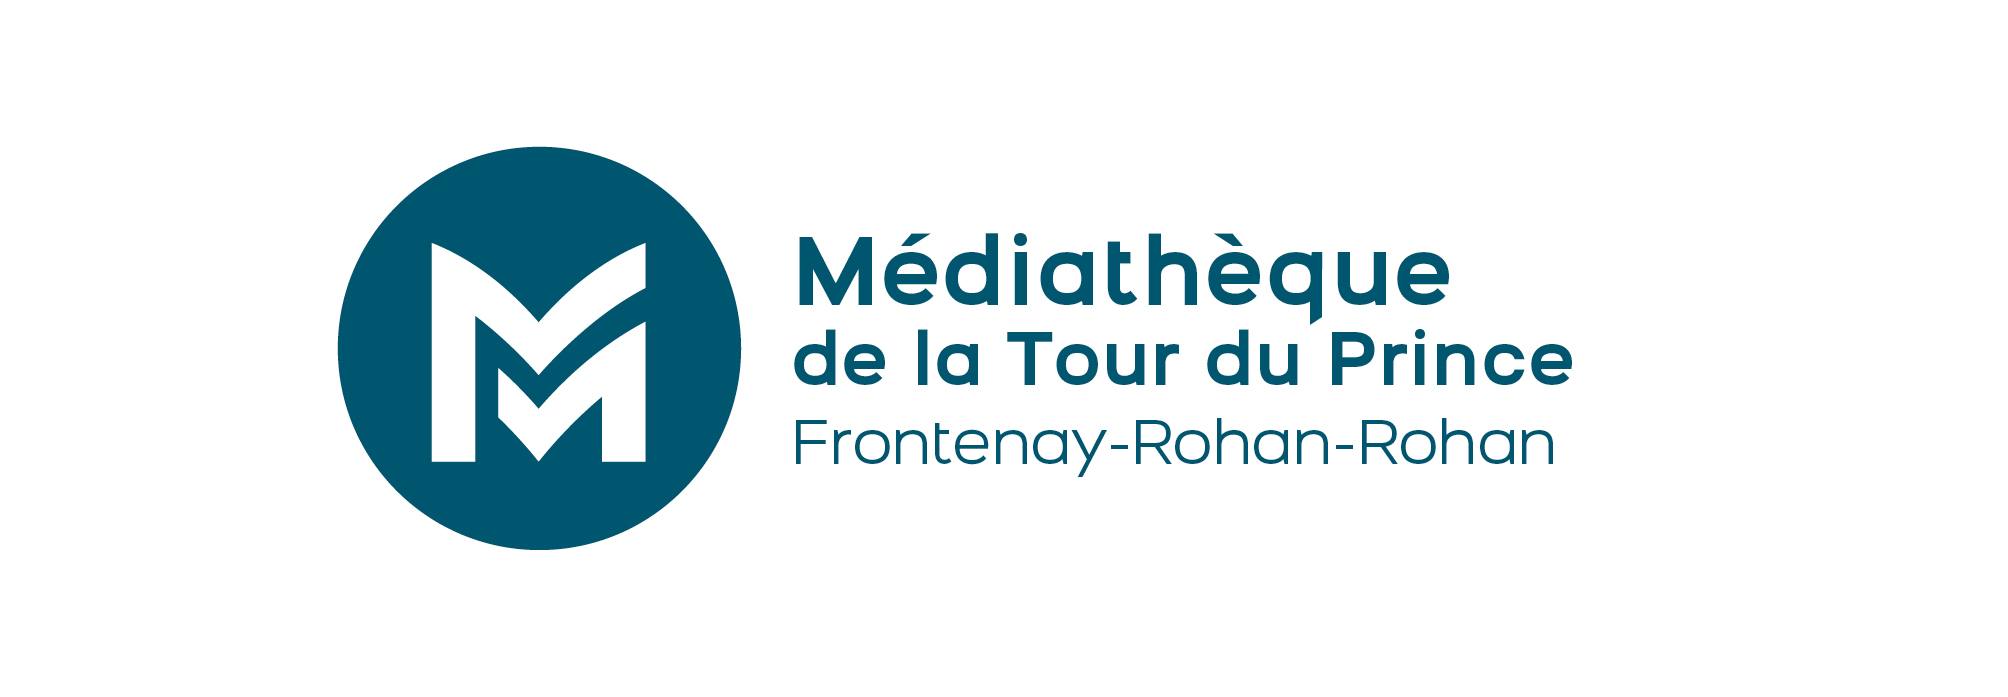 Médiathèque Frontenay-Rohan-Rohan